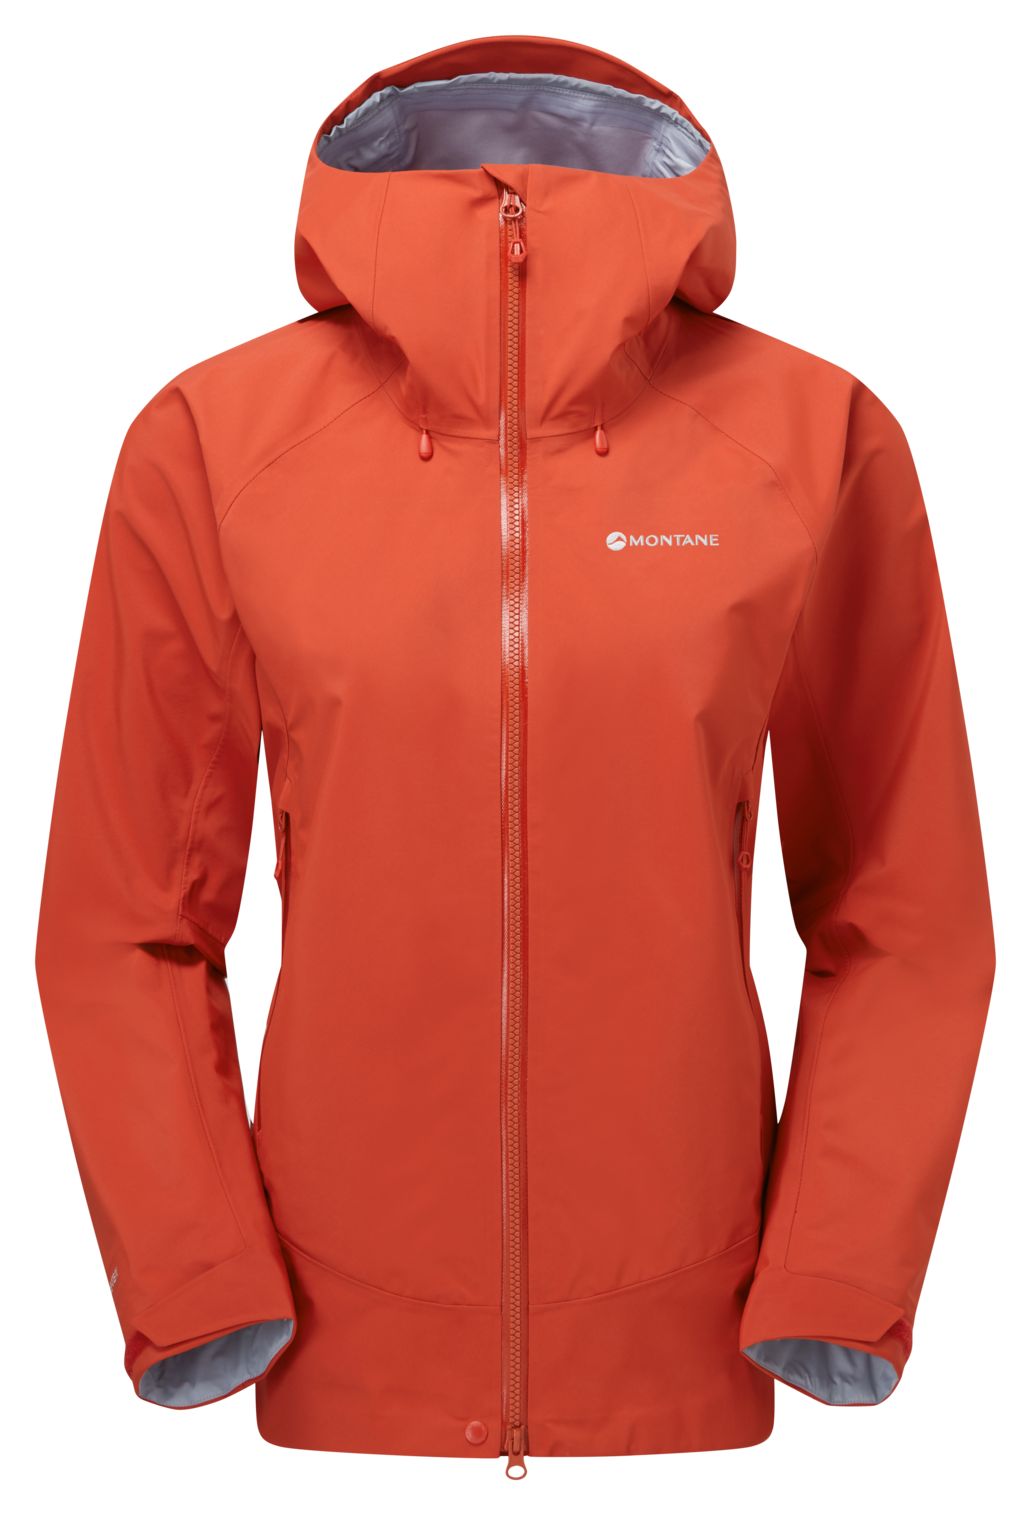 Montane dámská bunda Phase XT Jacket Barva: Saffron Red, Velikost: UK16/XL